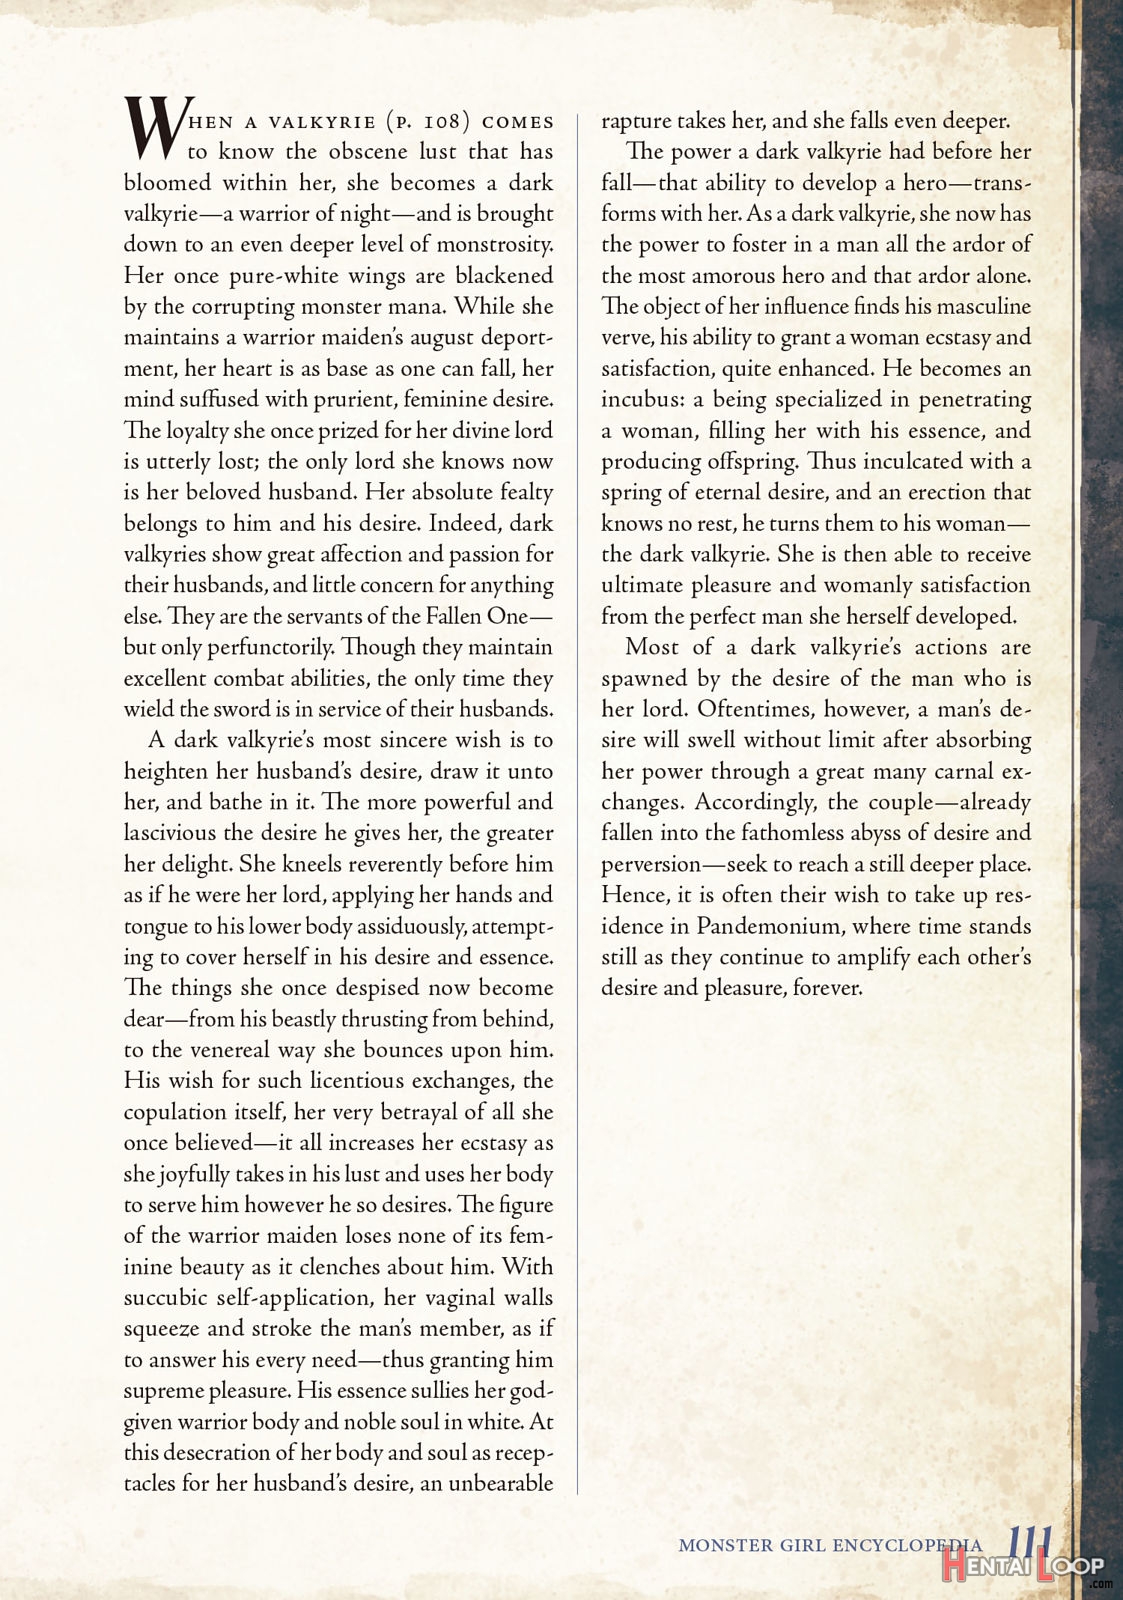 Monster Girl Encyclopedia Vol. 2 page 112